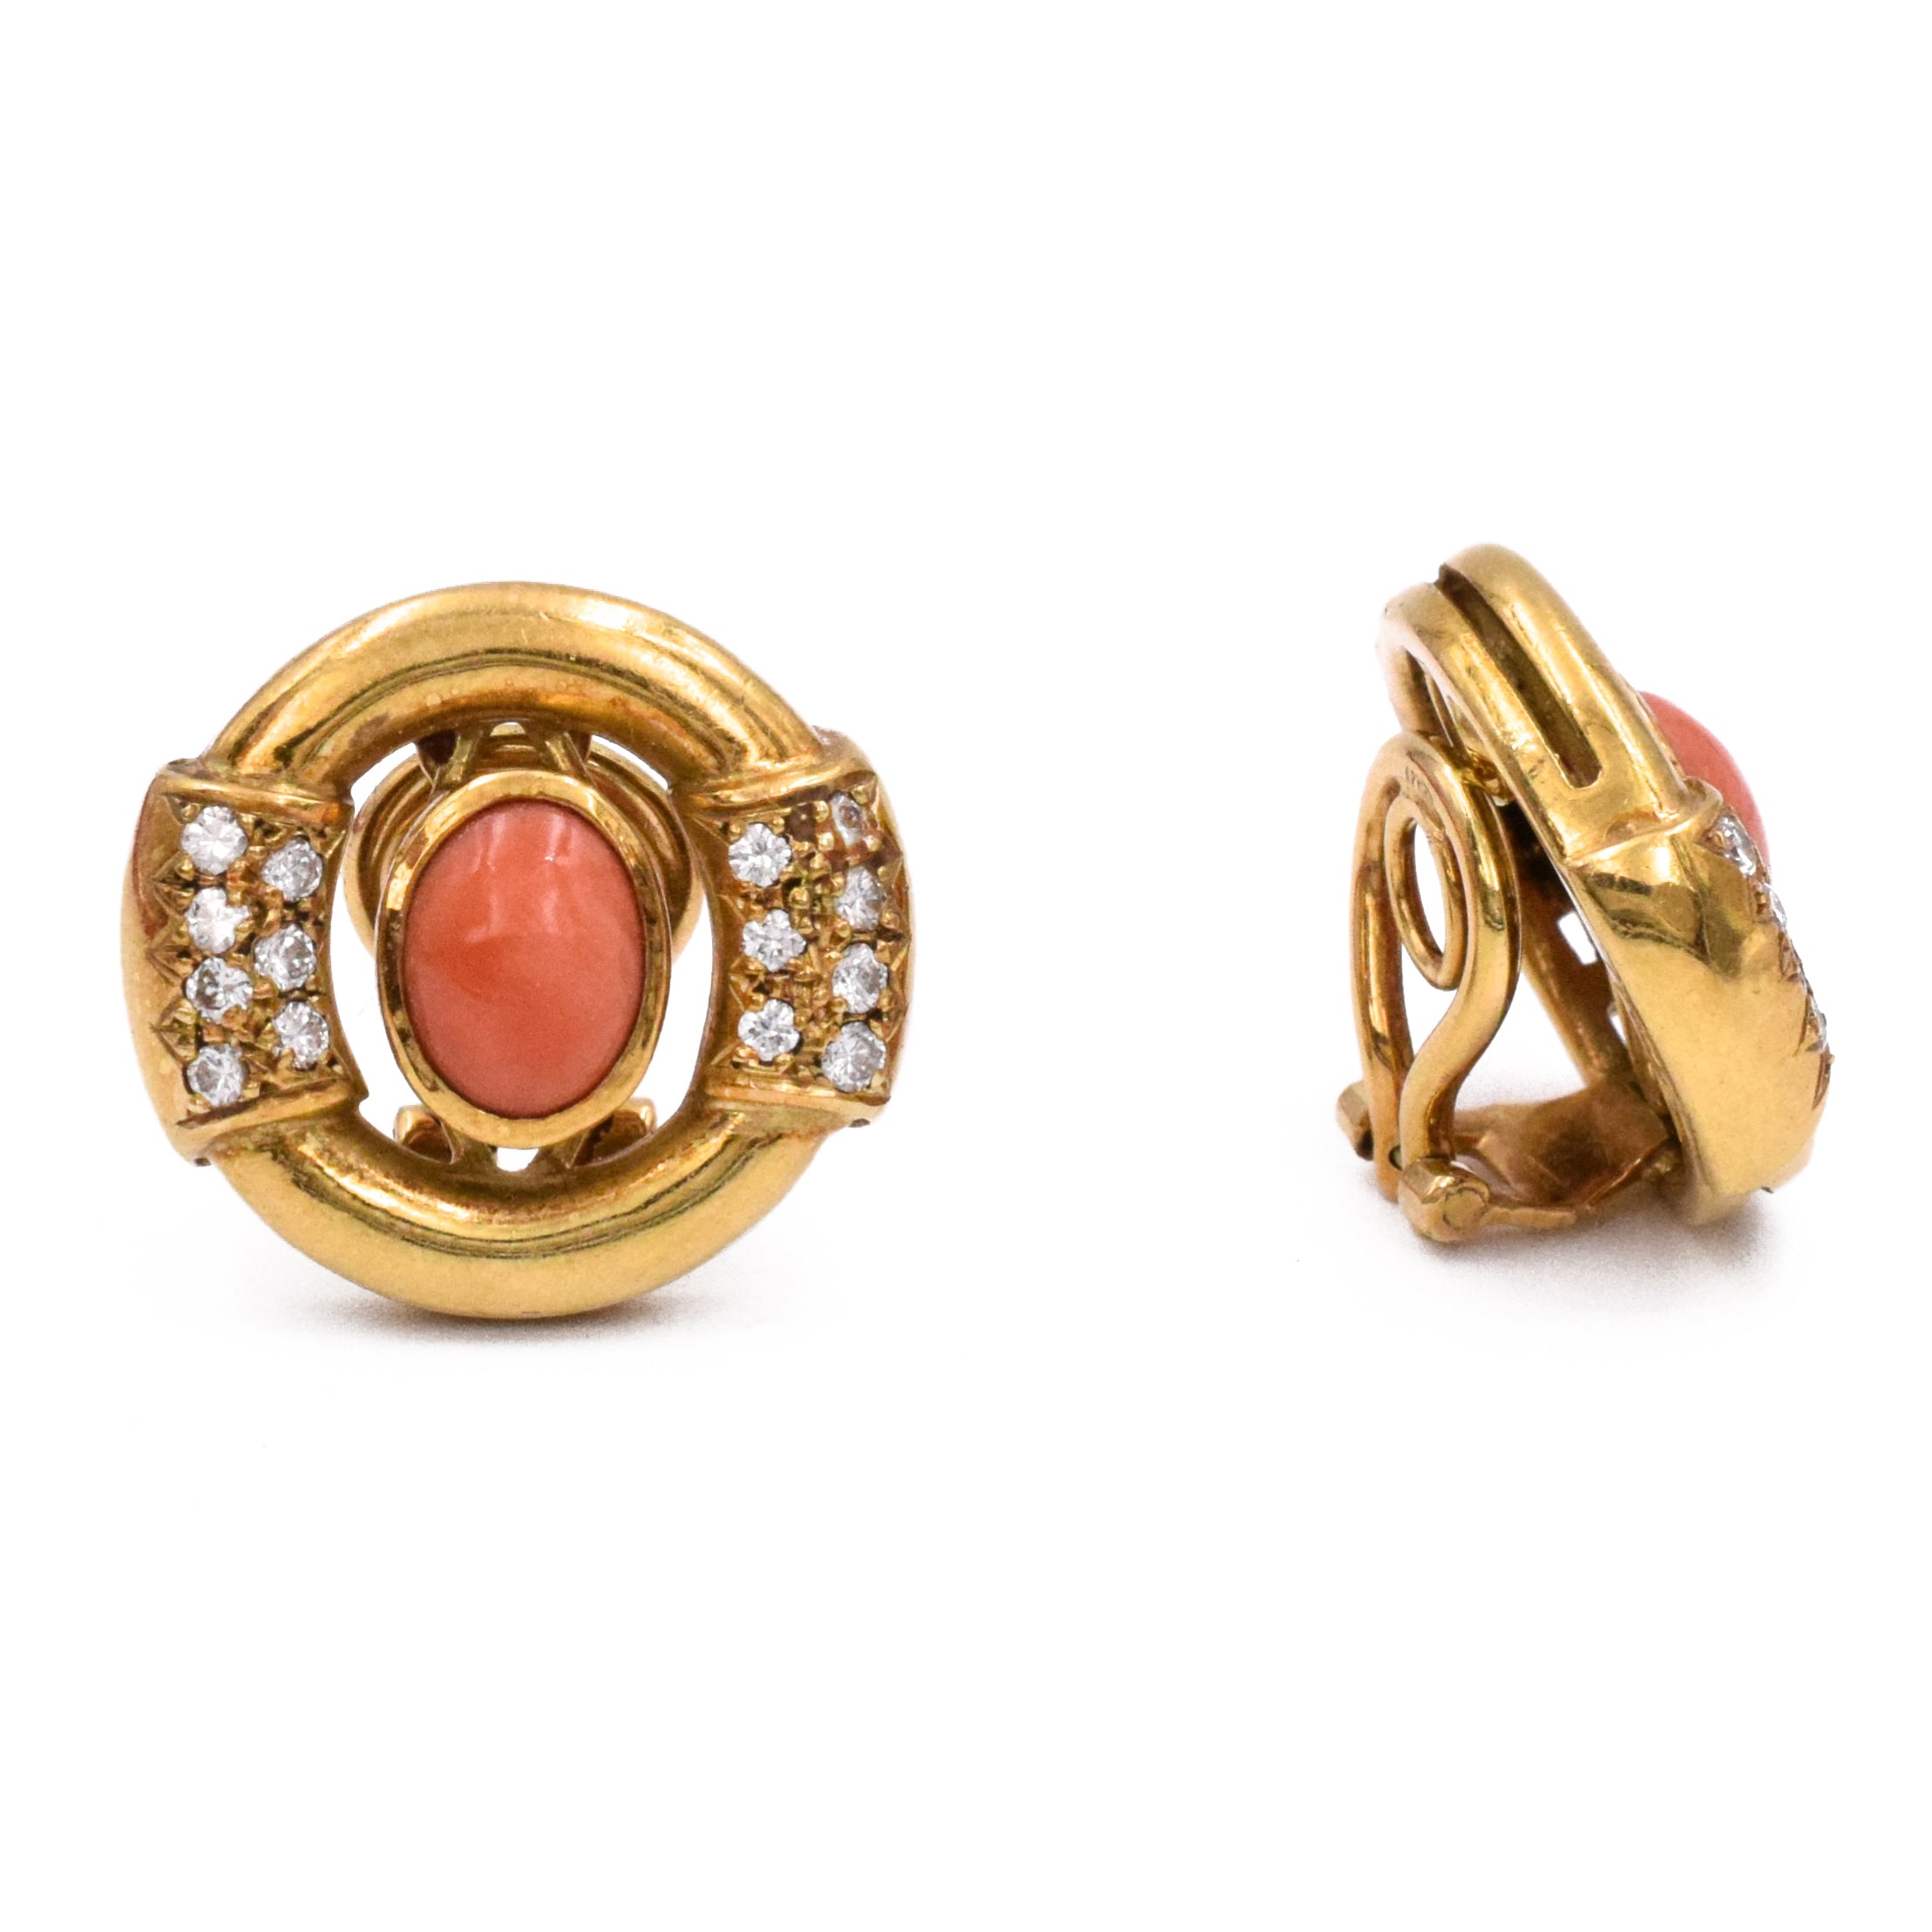 Gucci Coral & Diamond, Necklace, Bracelet & Earrings Set